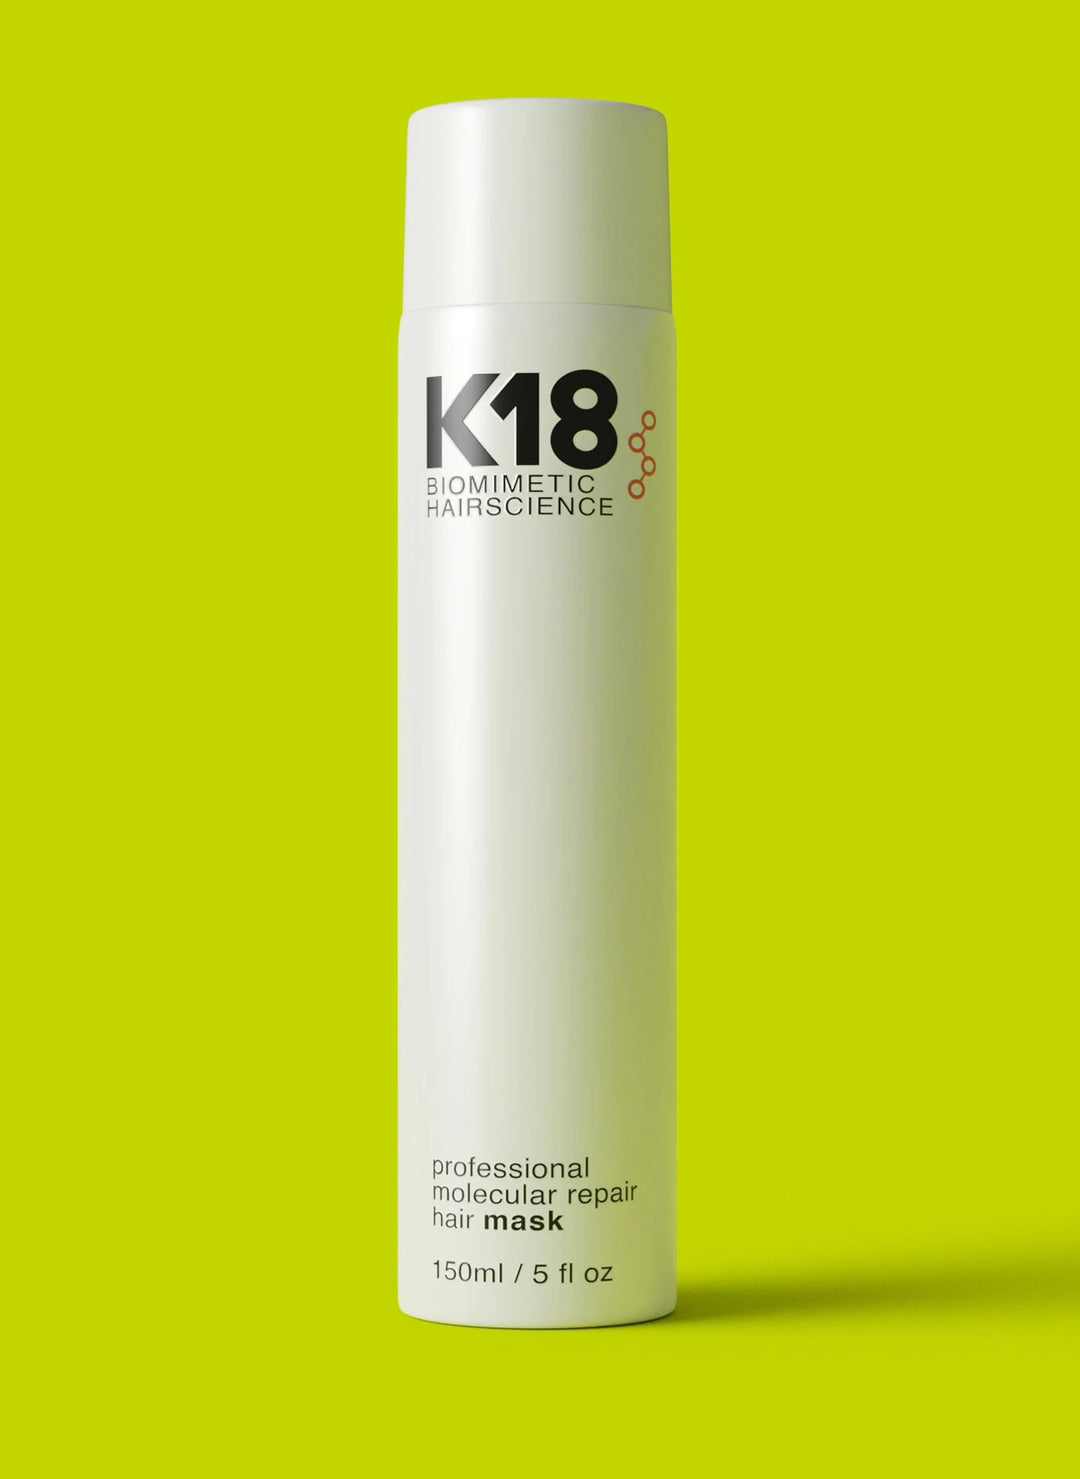 K18 Biomimetic Hairscience Professional Molecular Repair Hair Mask image of 5 oz bottle